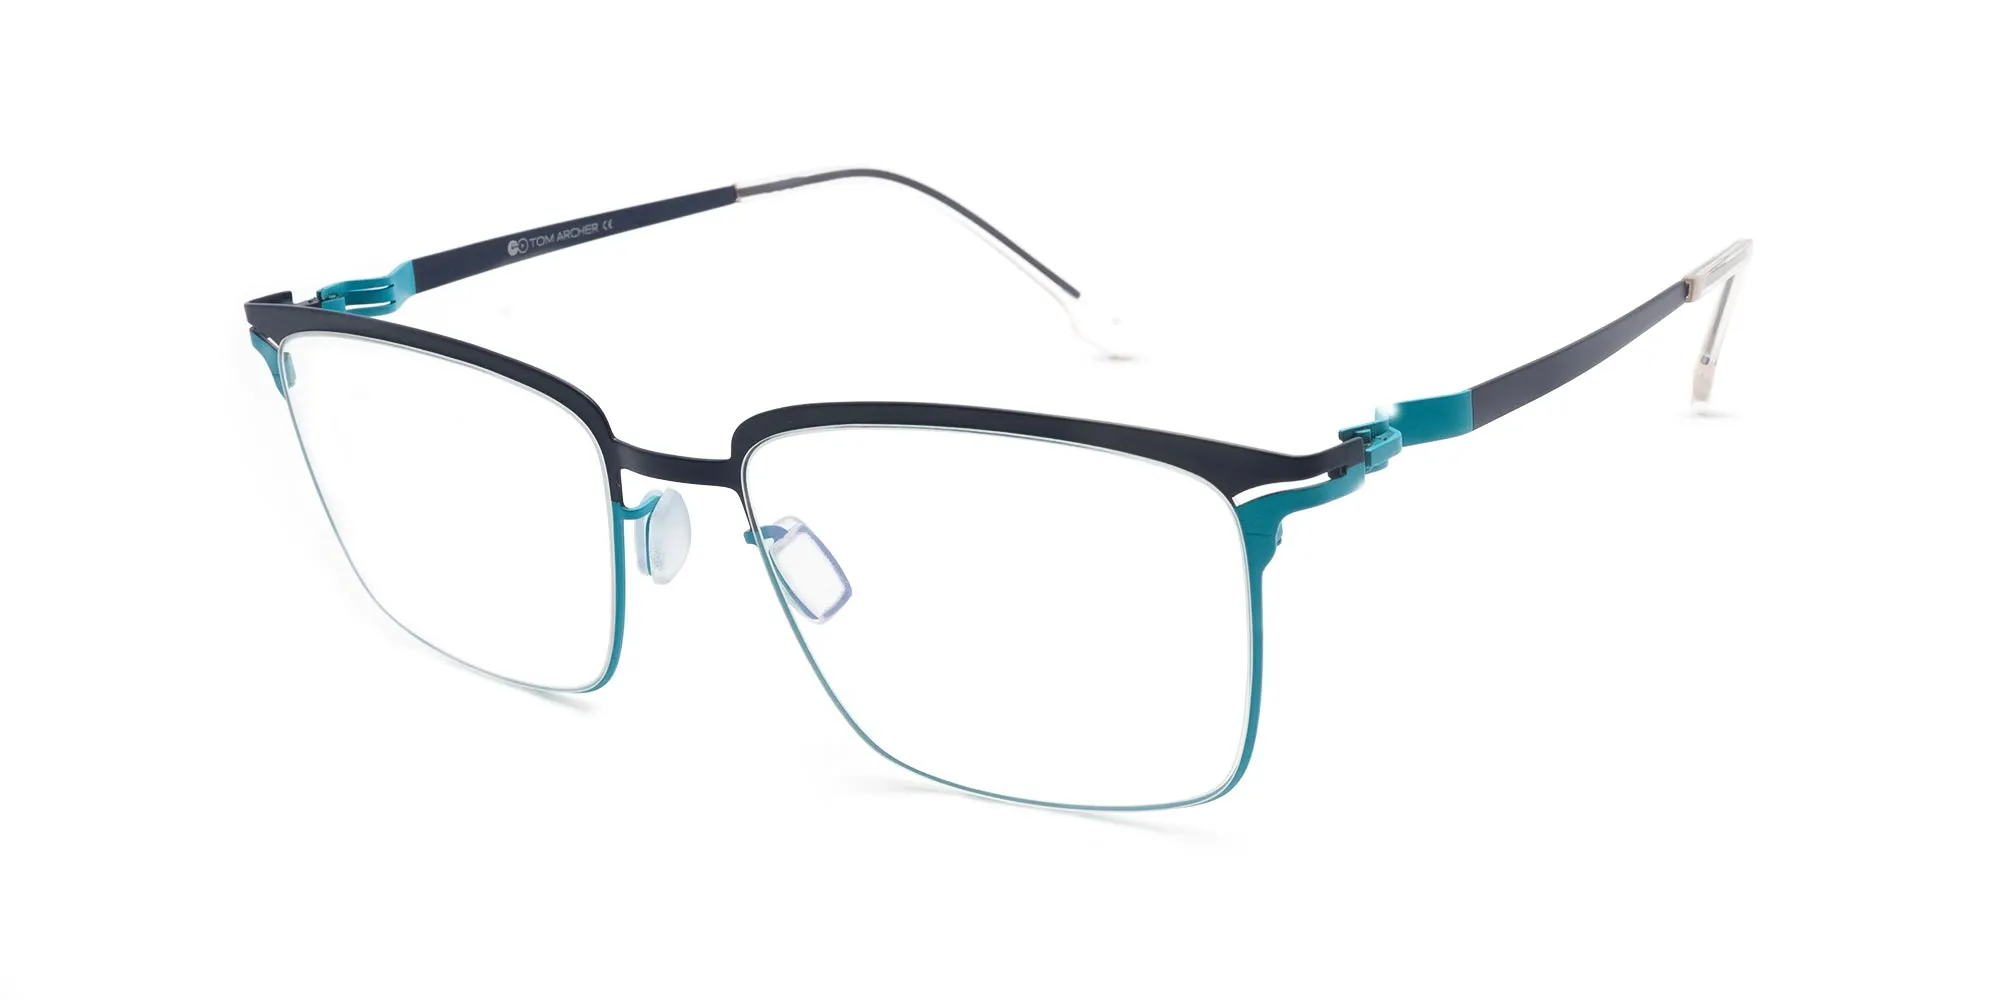 Metallic Aque and Metallic Navy Blue Frame Glasses-2